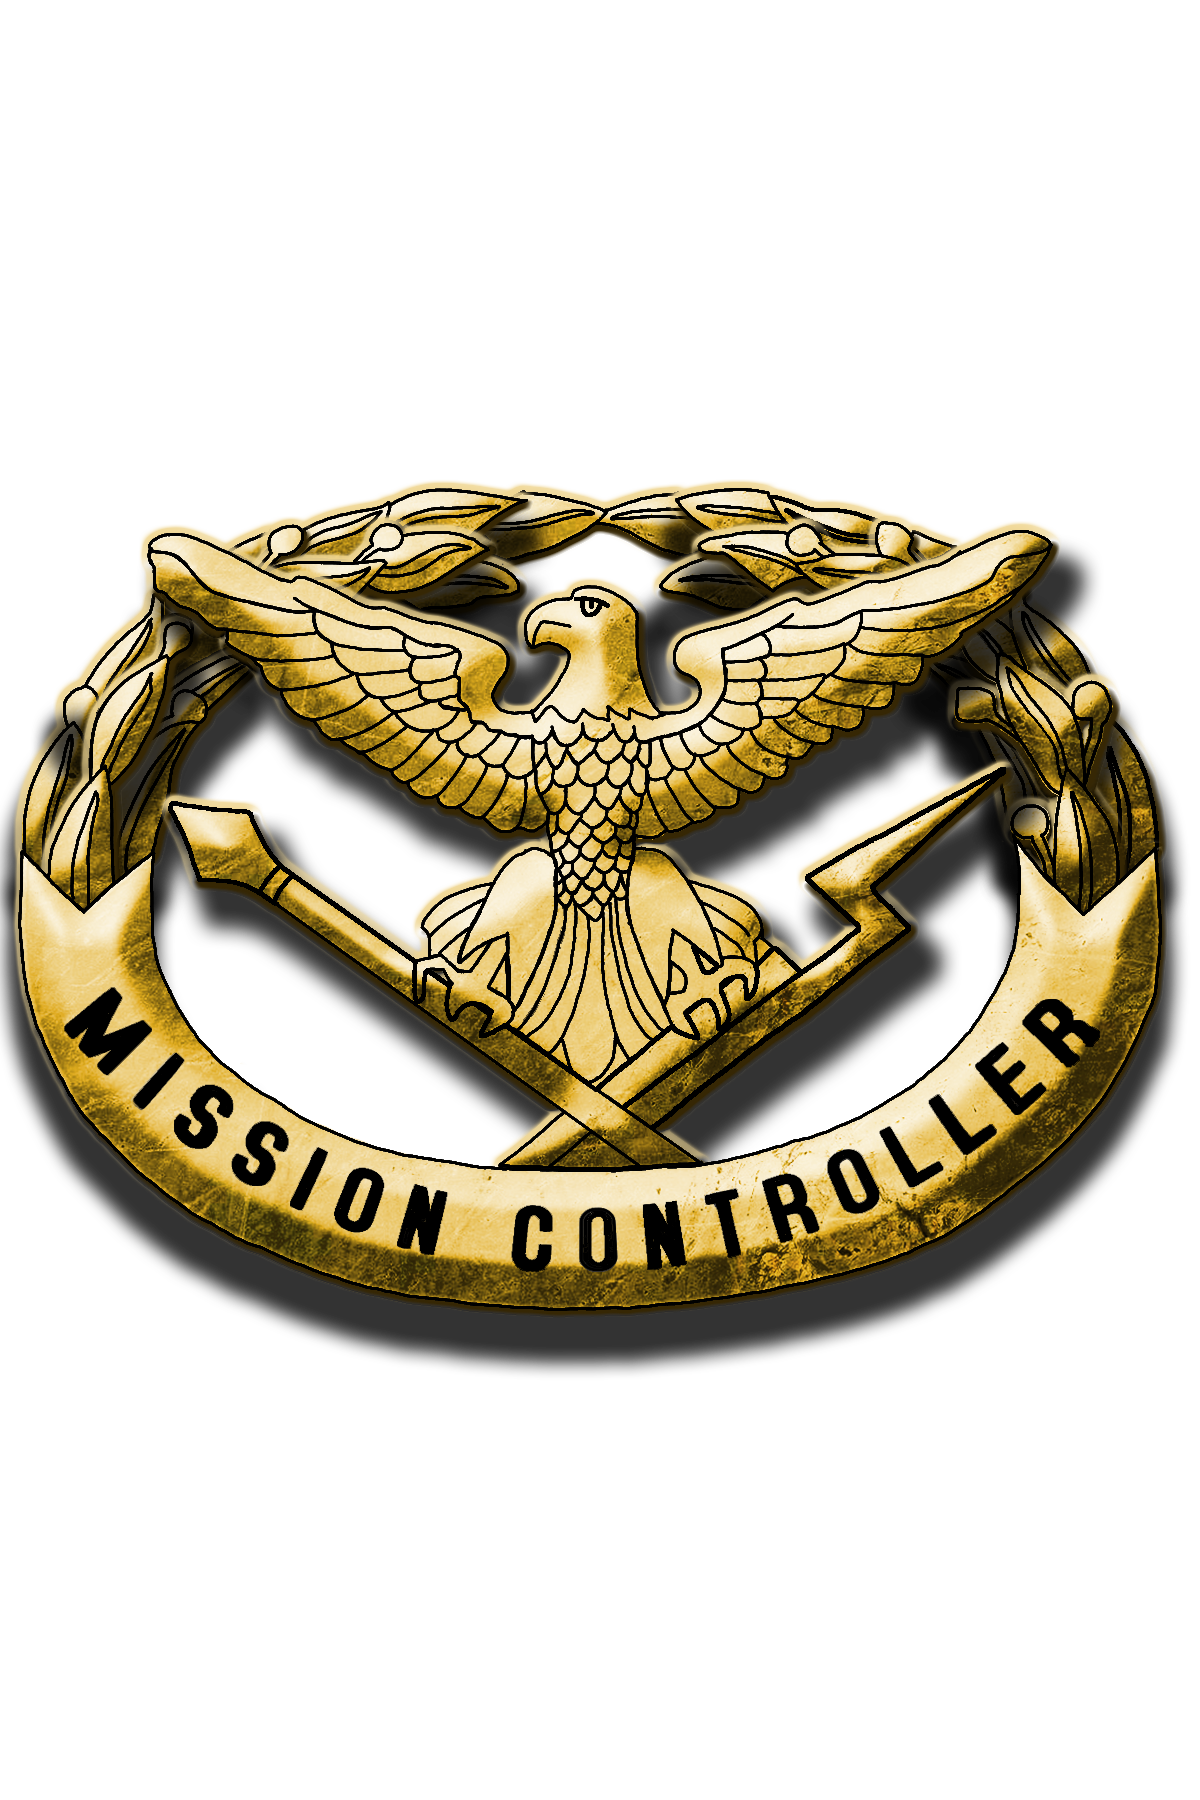 Master-Mission-Controller-Badge.png